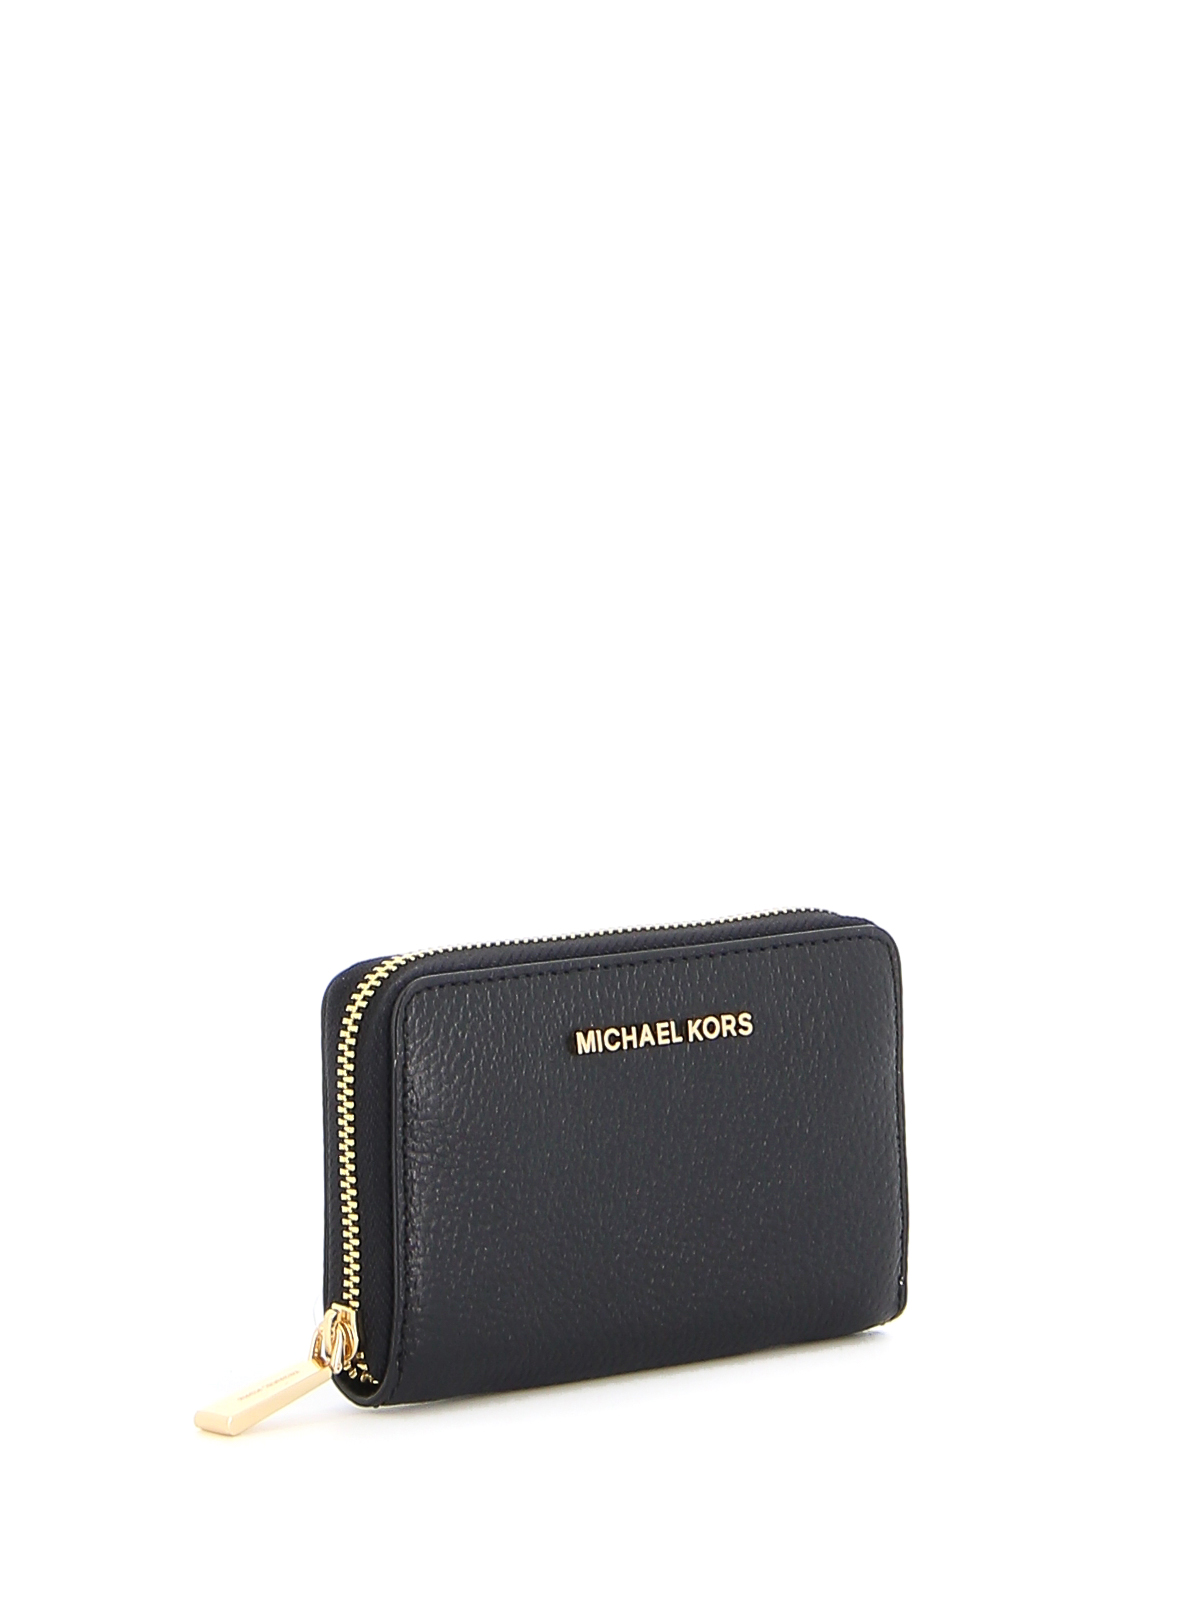 Medium Saffiano Leather Chain Card Case | Michael Kors